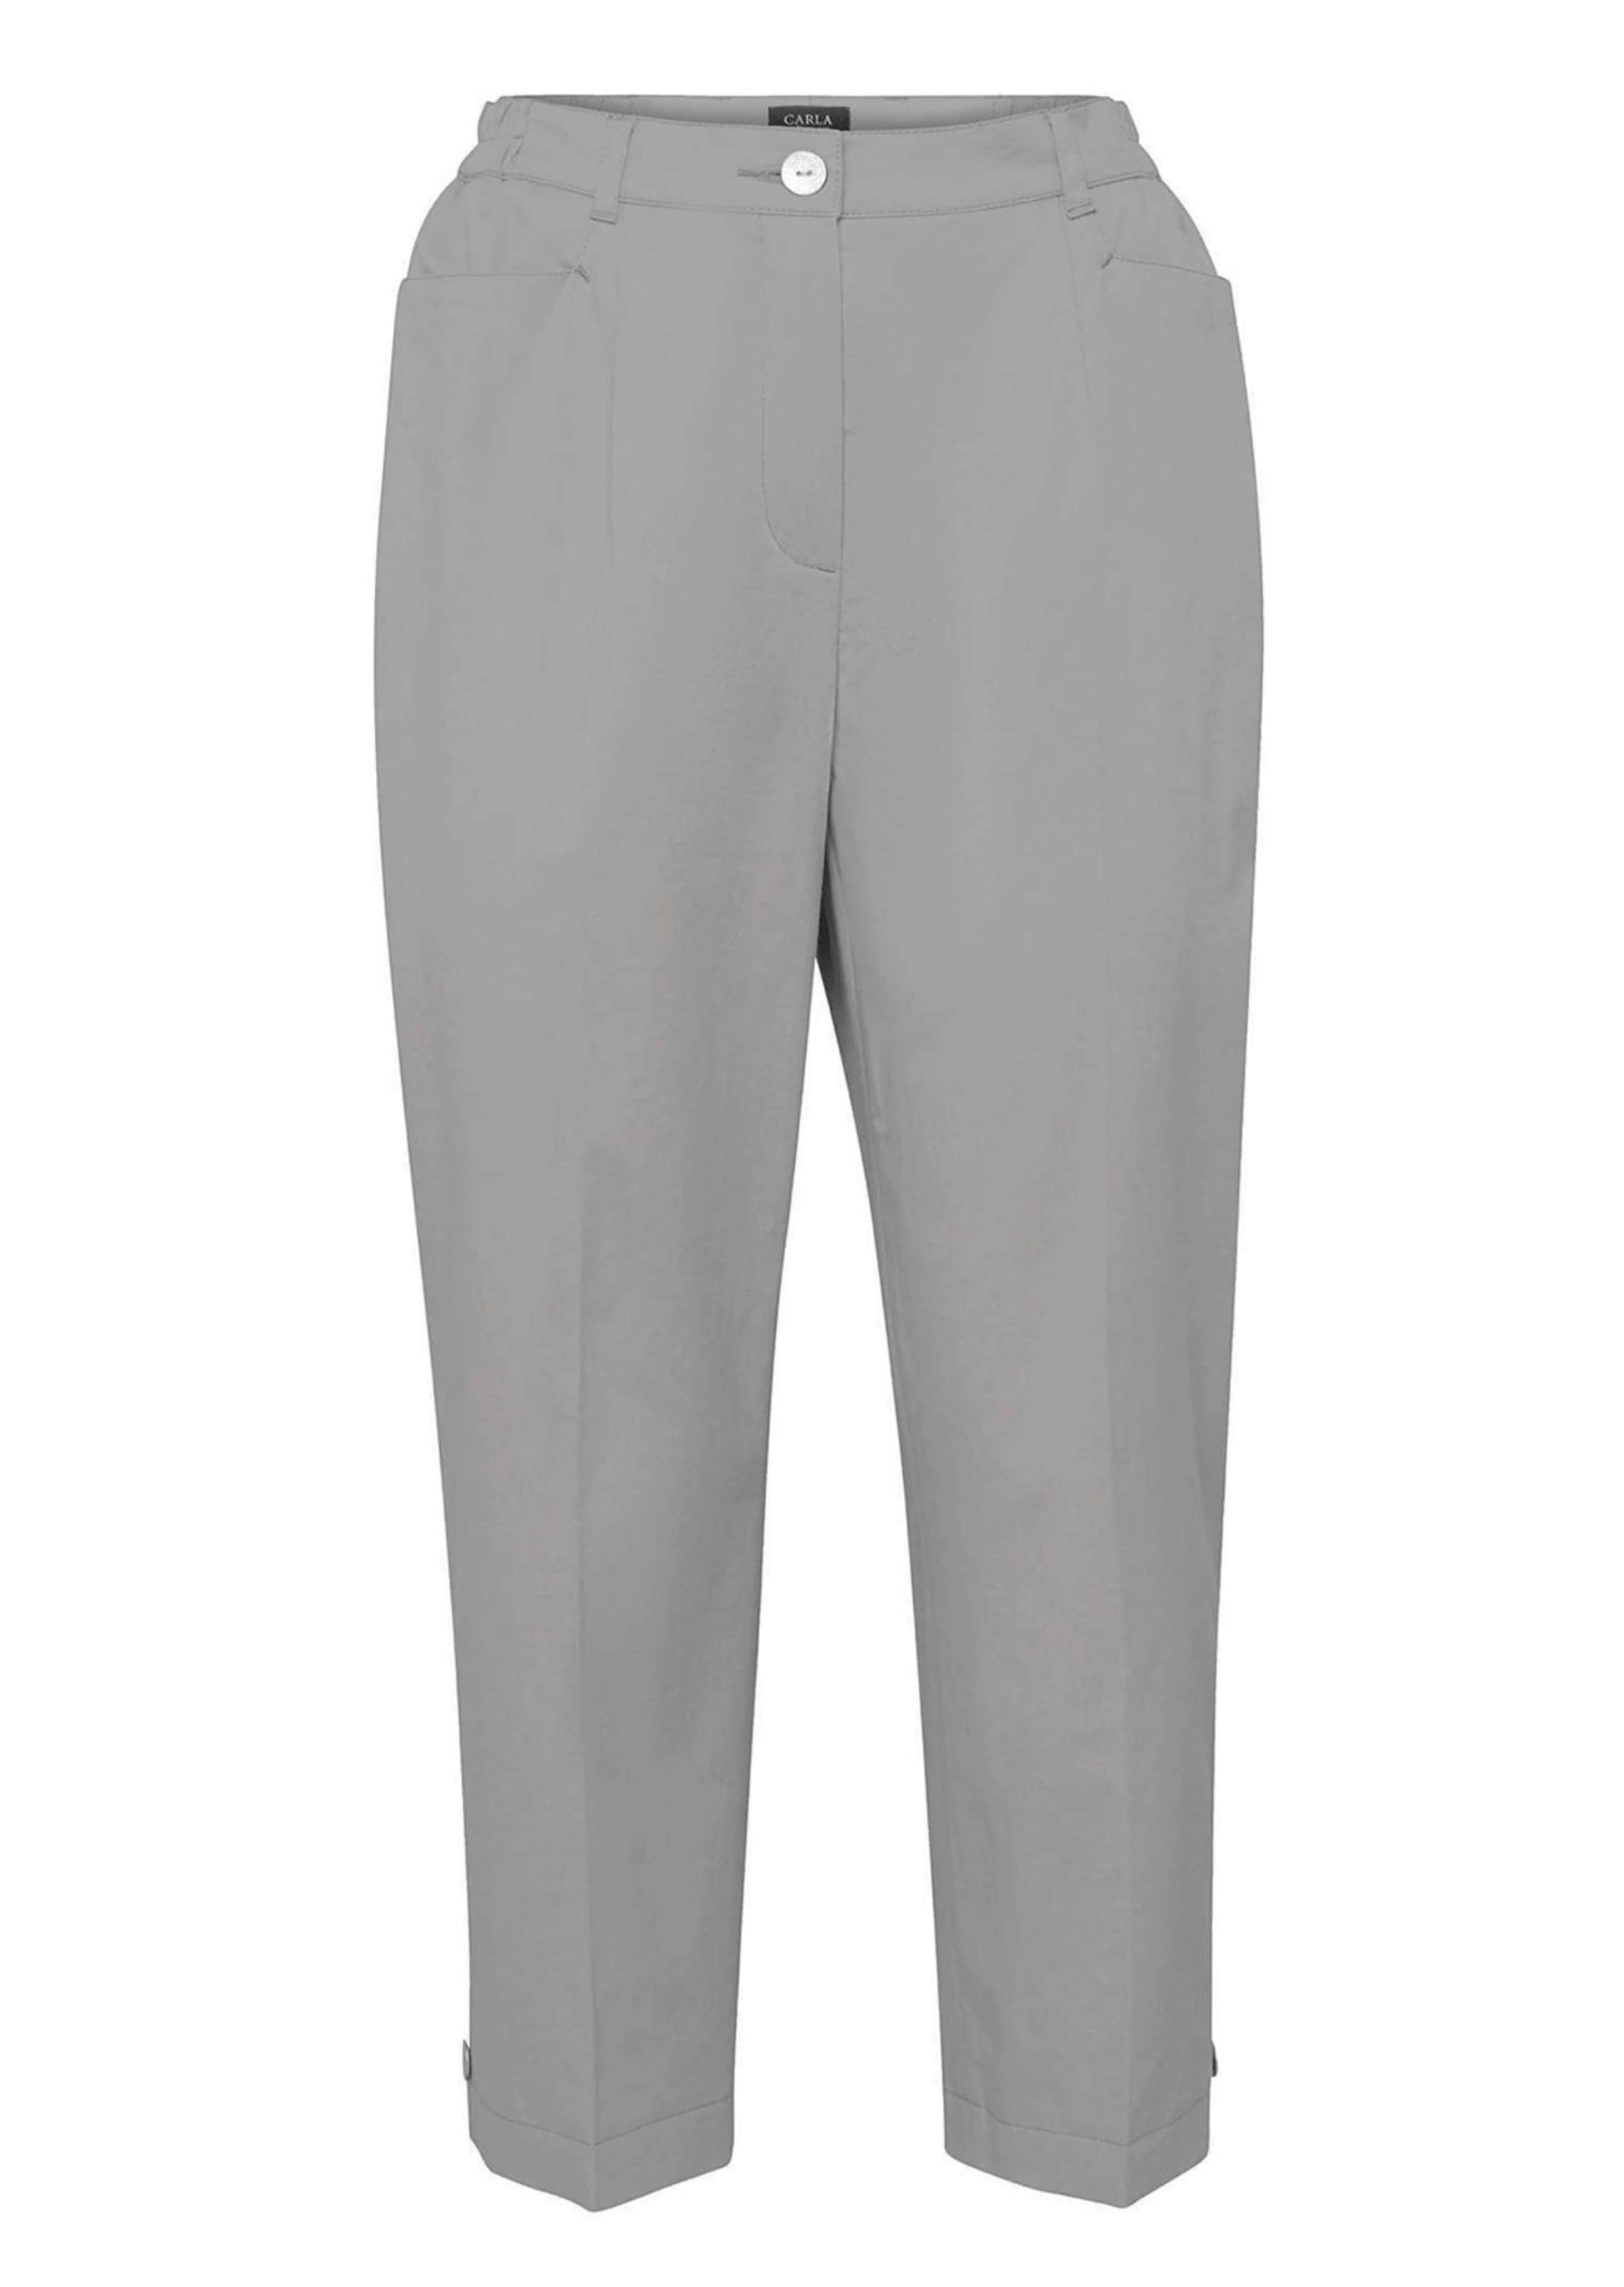 Pantalon 3/4 CARLA en coton Pima - gris - Gr. 22 de Goldner Fashion